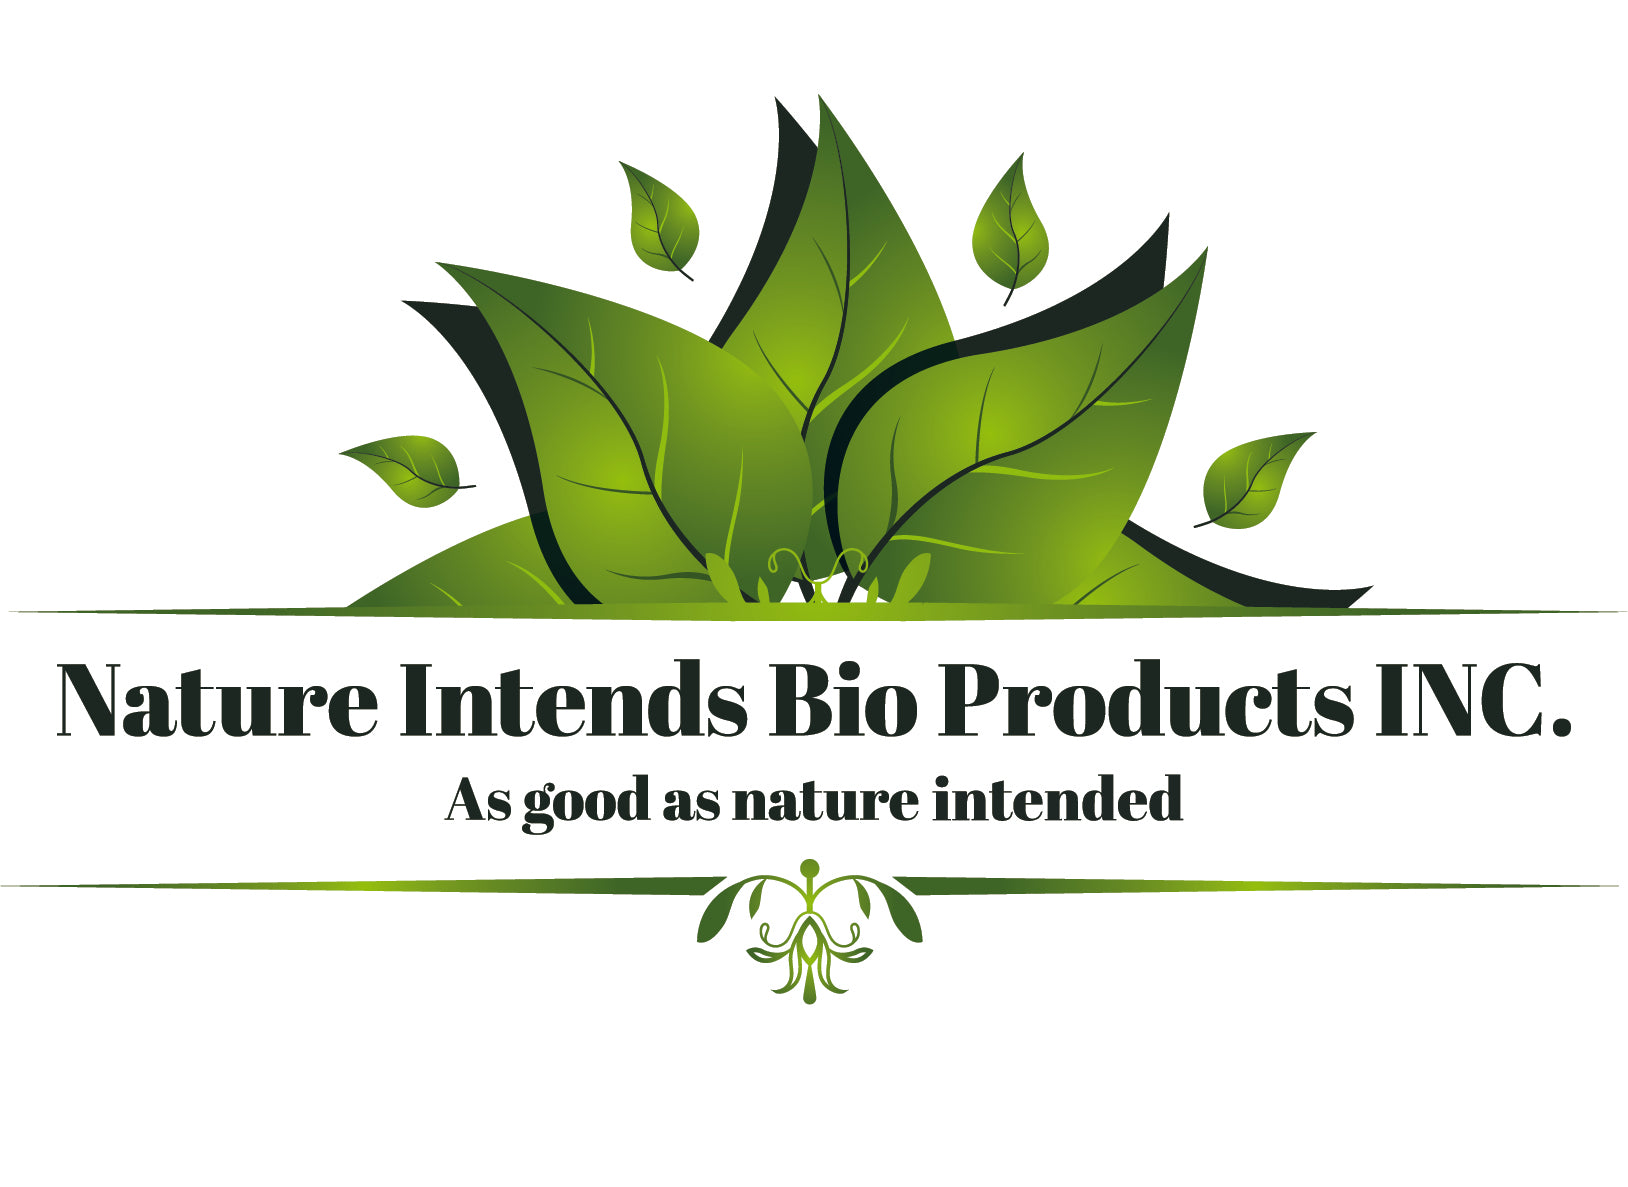 Watt Seraph pølse Nature Intends Bio Products INC.